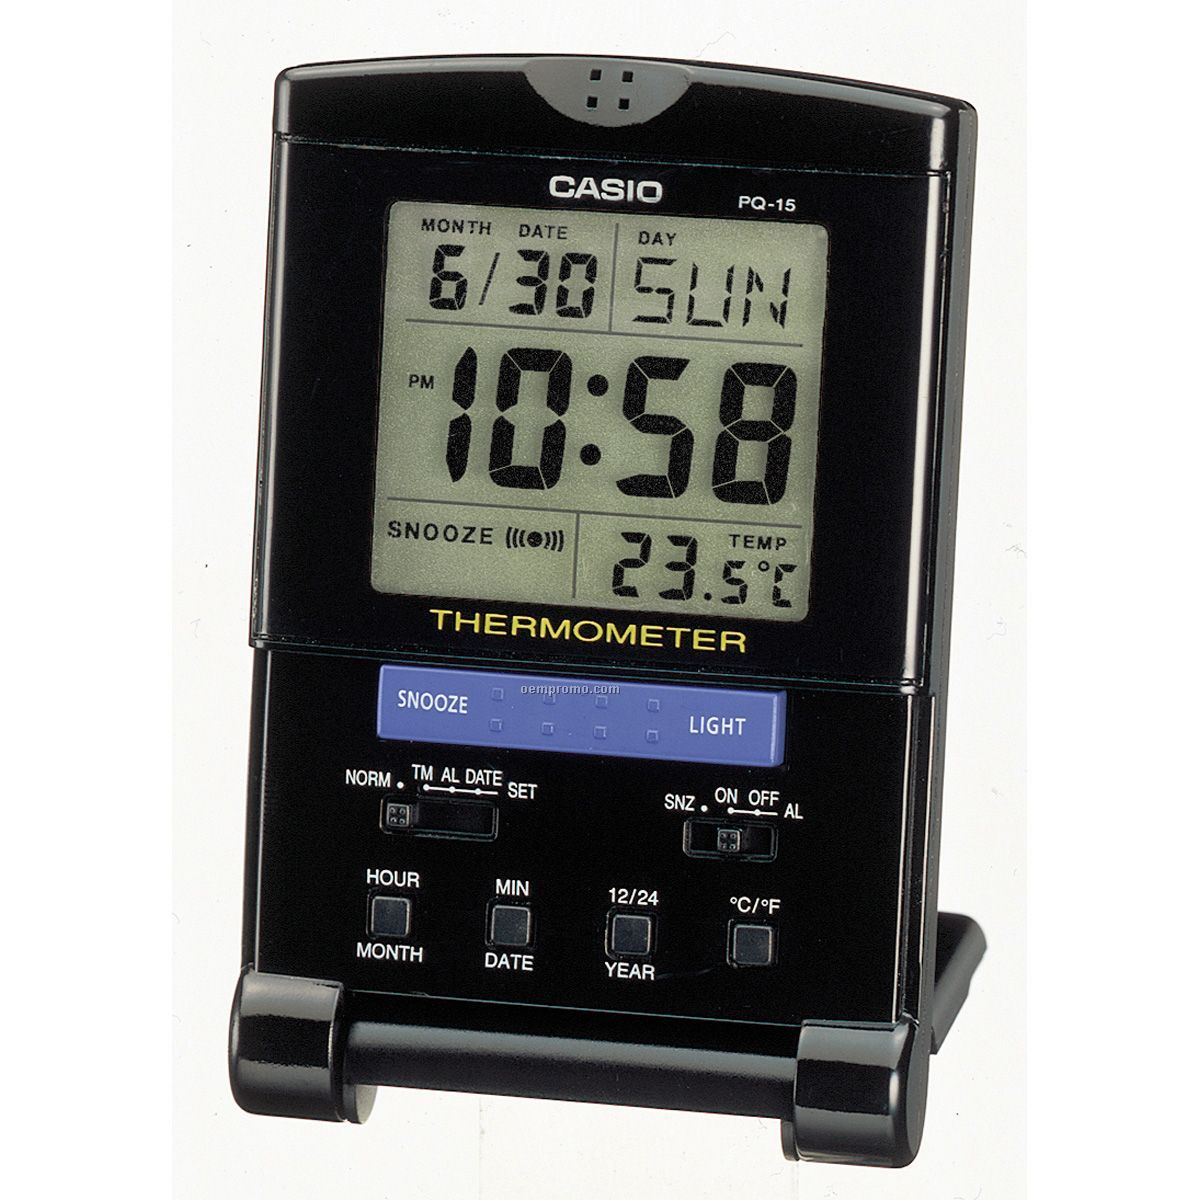 Casio Travel Alarm Clock W/ Thermometer